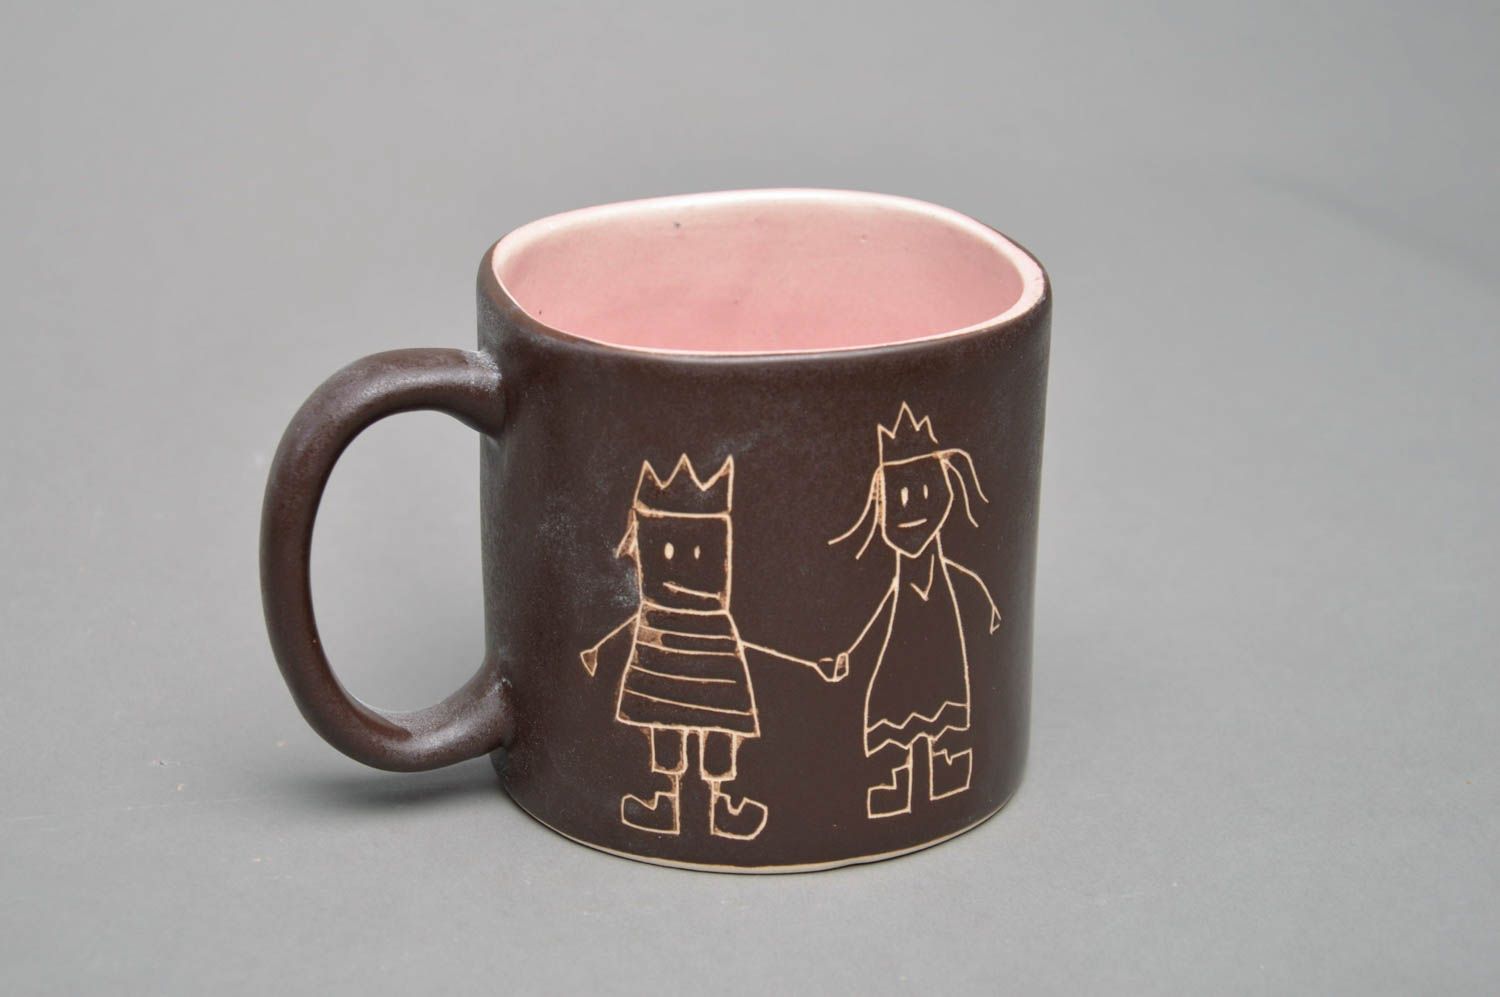 Glazed dark brown ceramic coffee mug for Lovers - great gift for St. Valentine's day photo 2